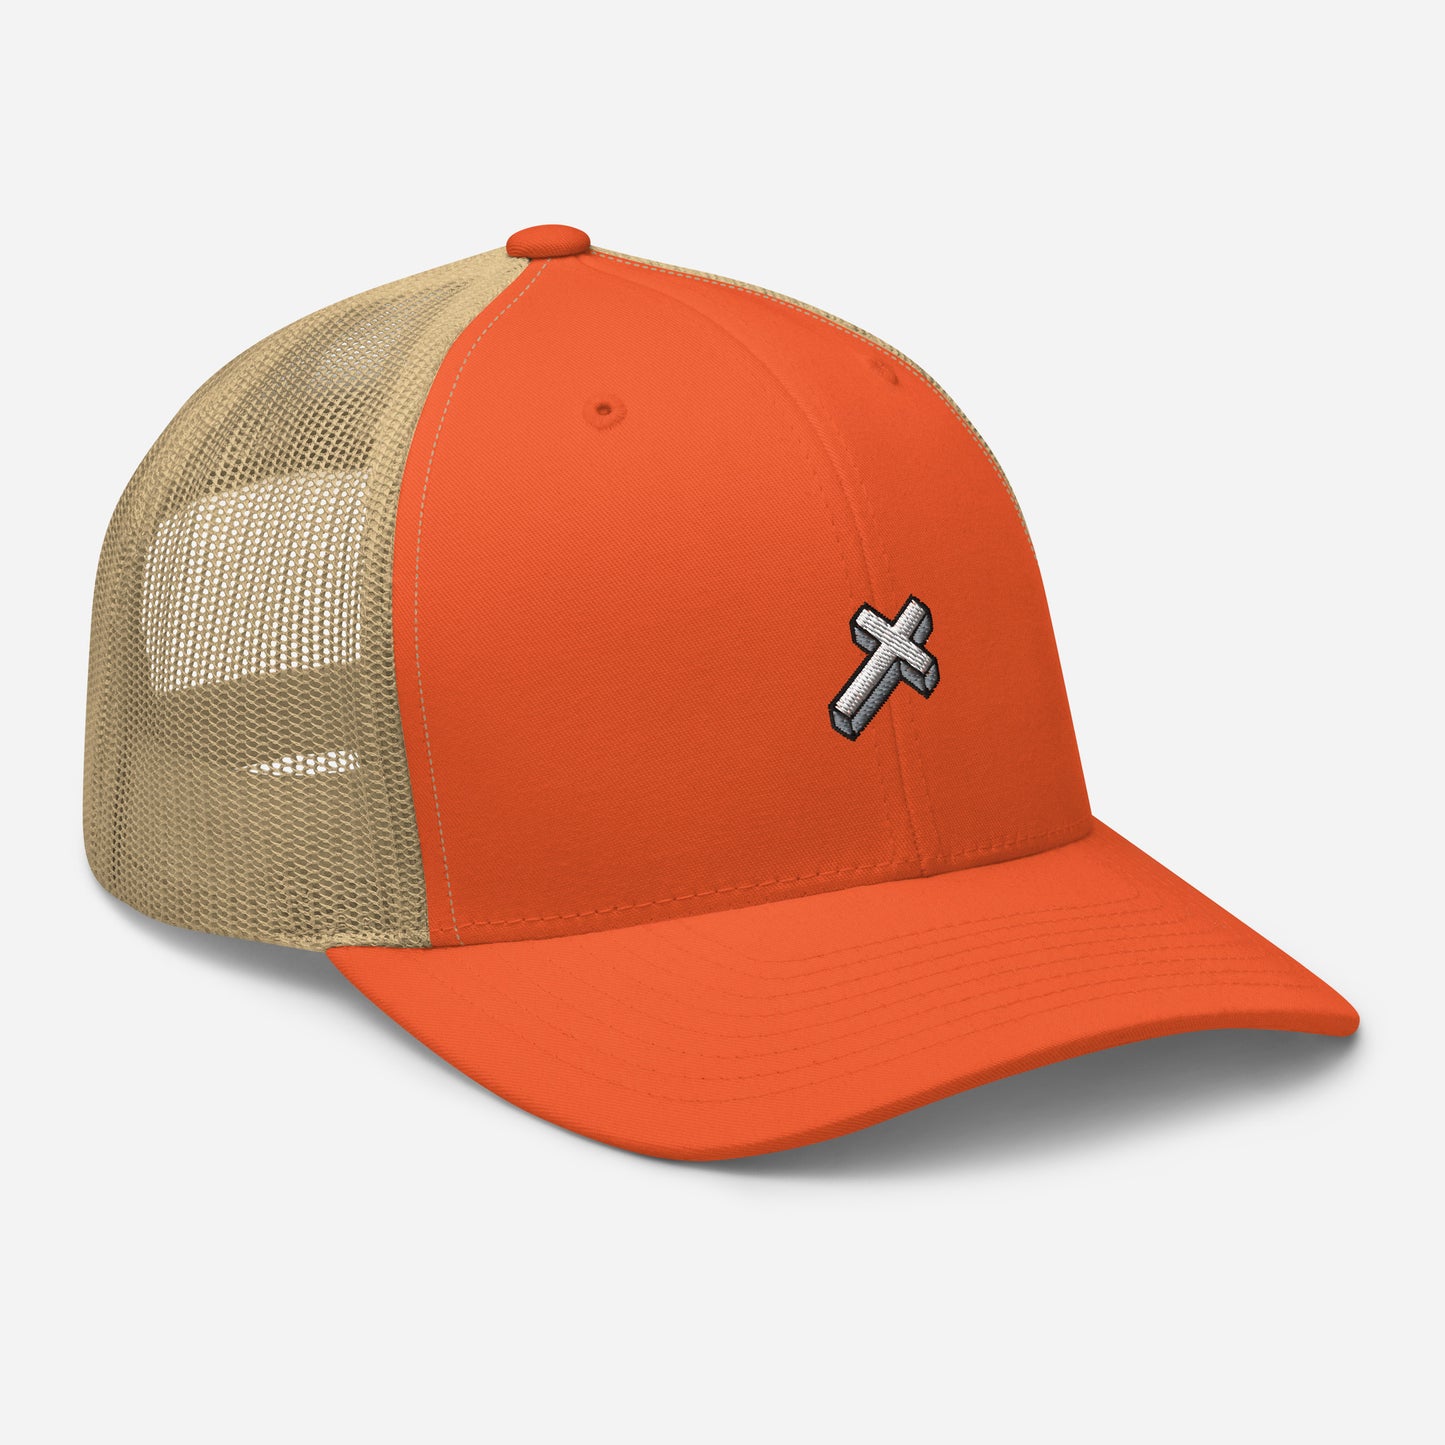 Mesh Cap with Cross Symbol